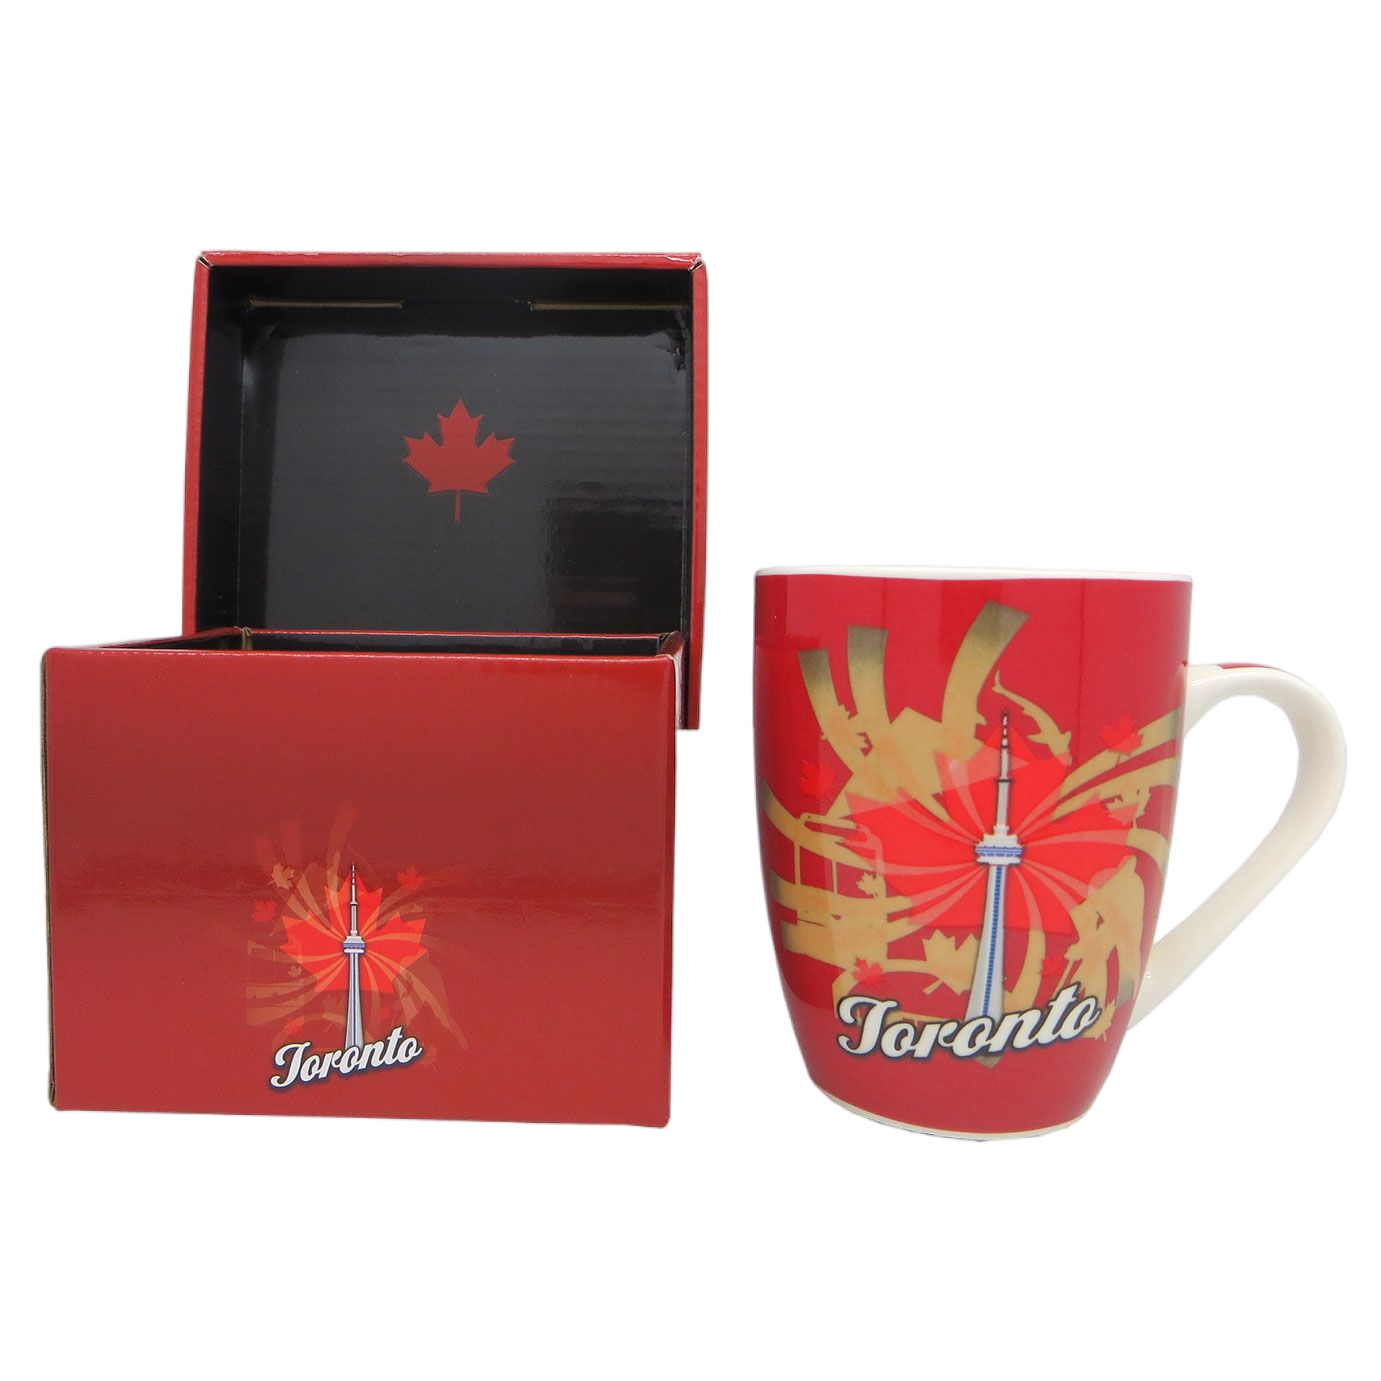 Canada Gift Mug - Toronto CN Tower